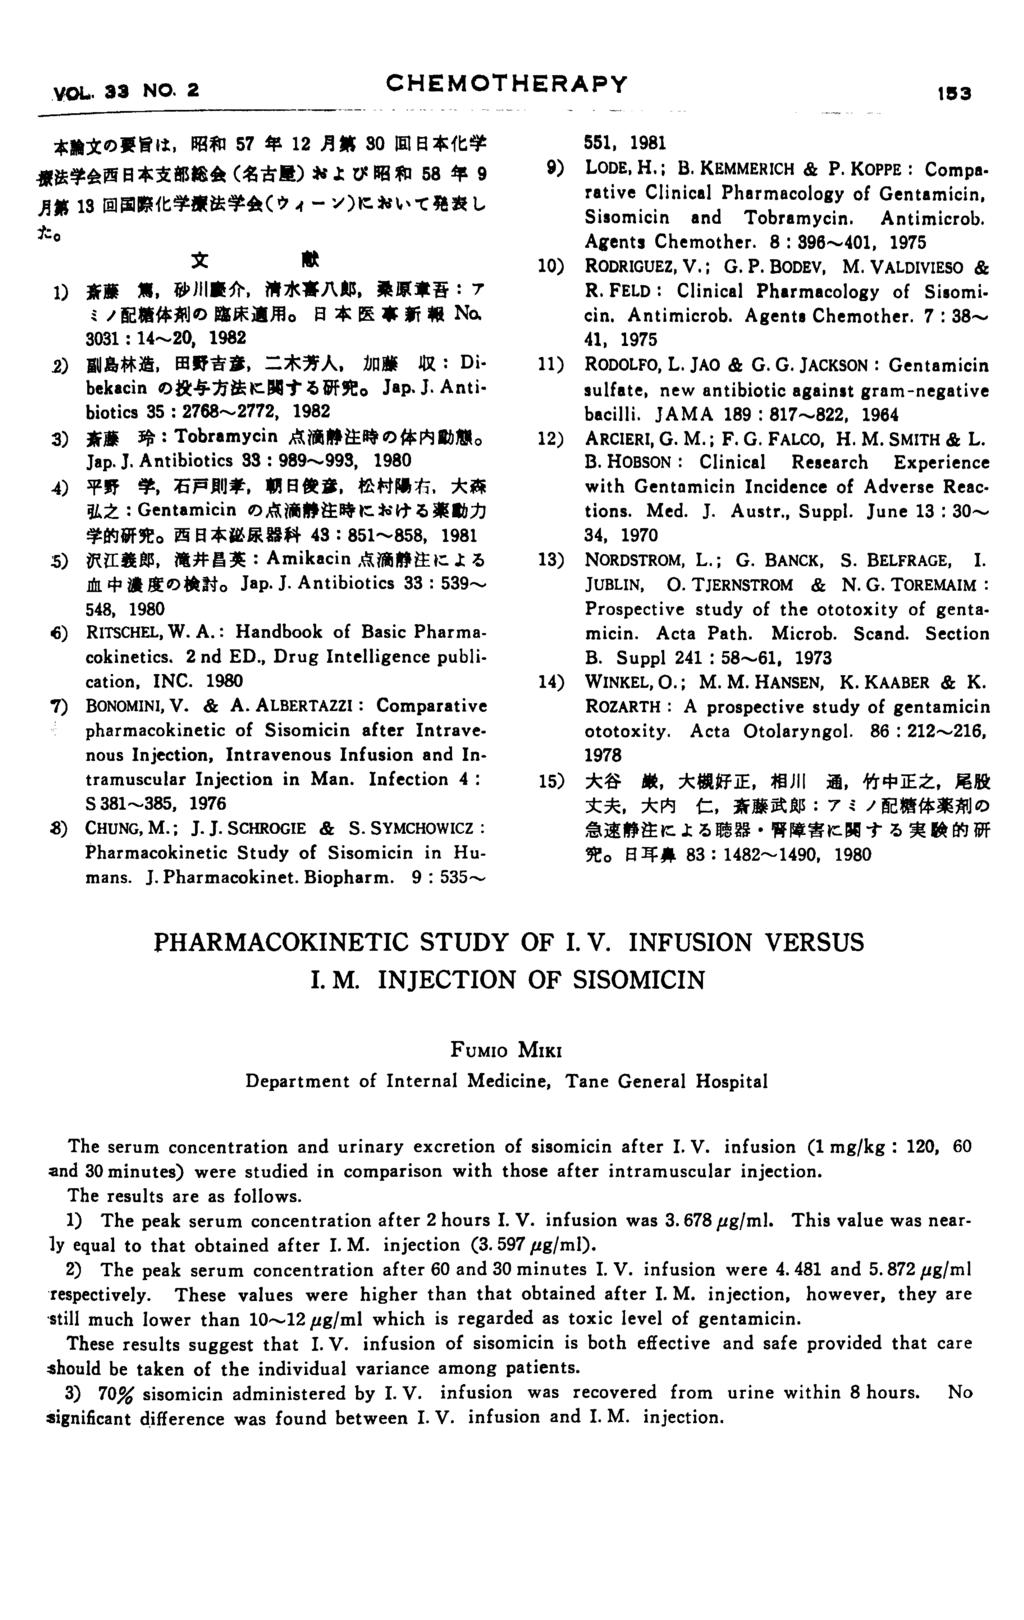 6) RITSCHEL, W. A.: Handbook of Basic Pharmacokinetics. 2 nd ED., Drug Intelligence publication, INC. 1980 7) BONOMINI, V. & A.